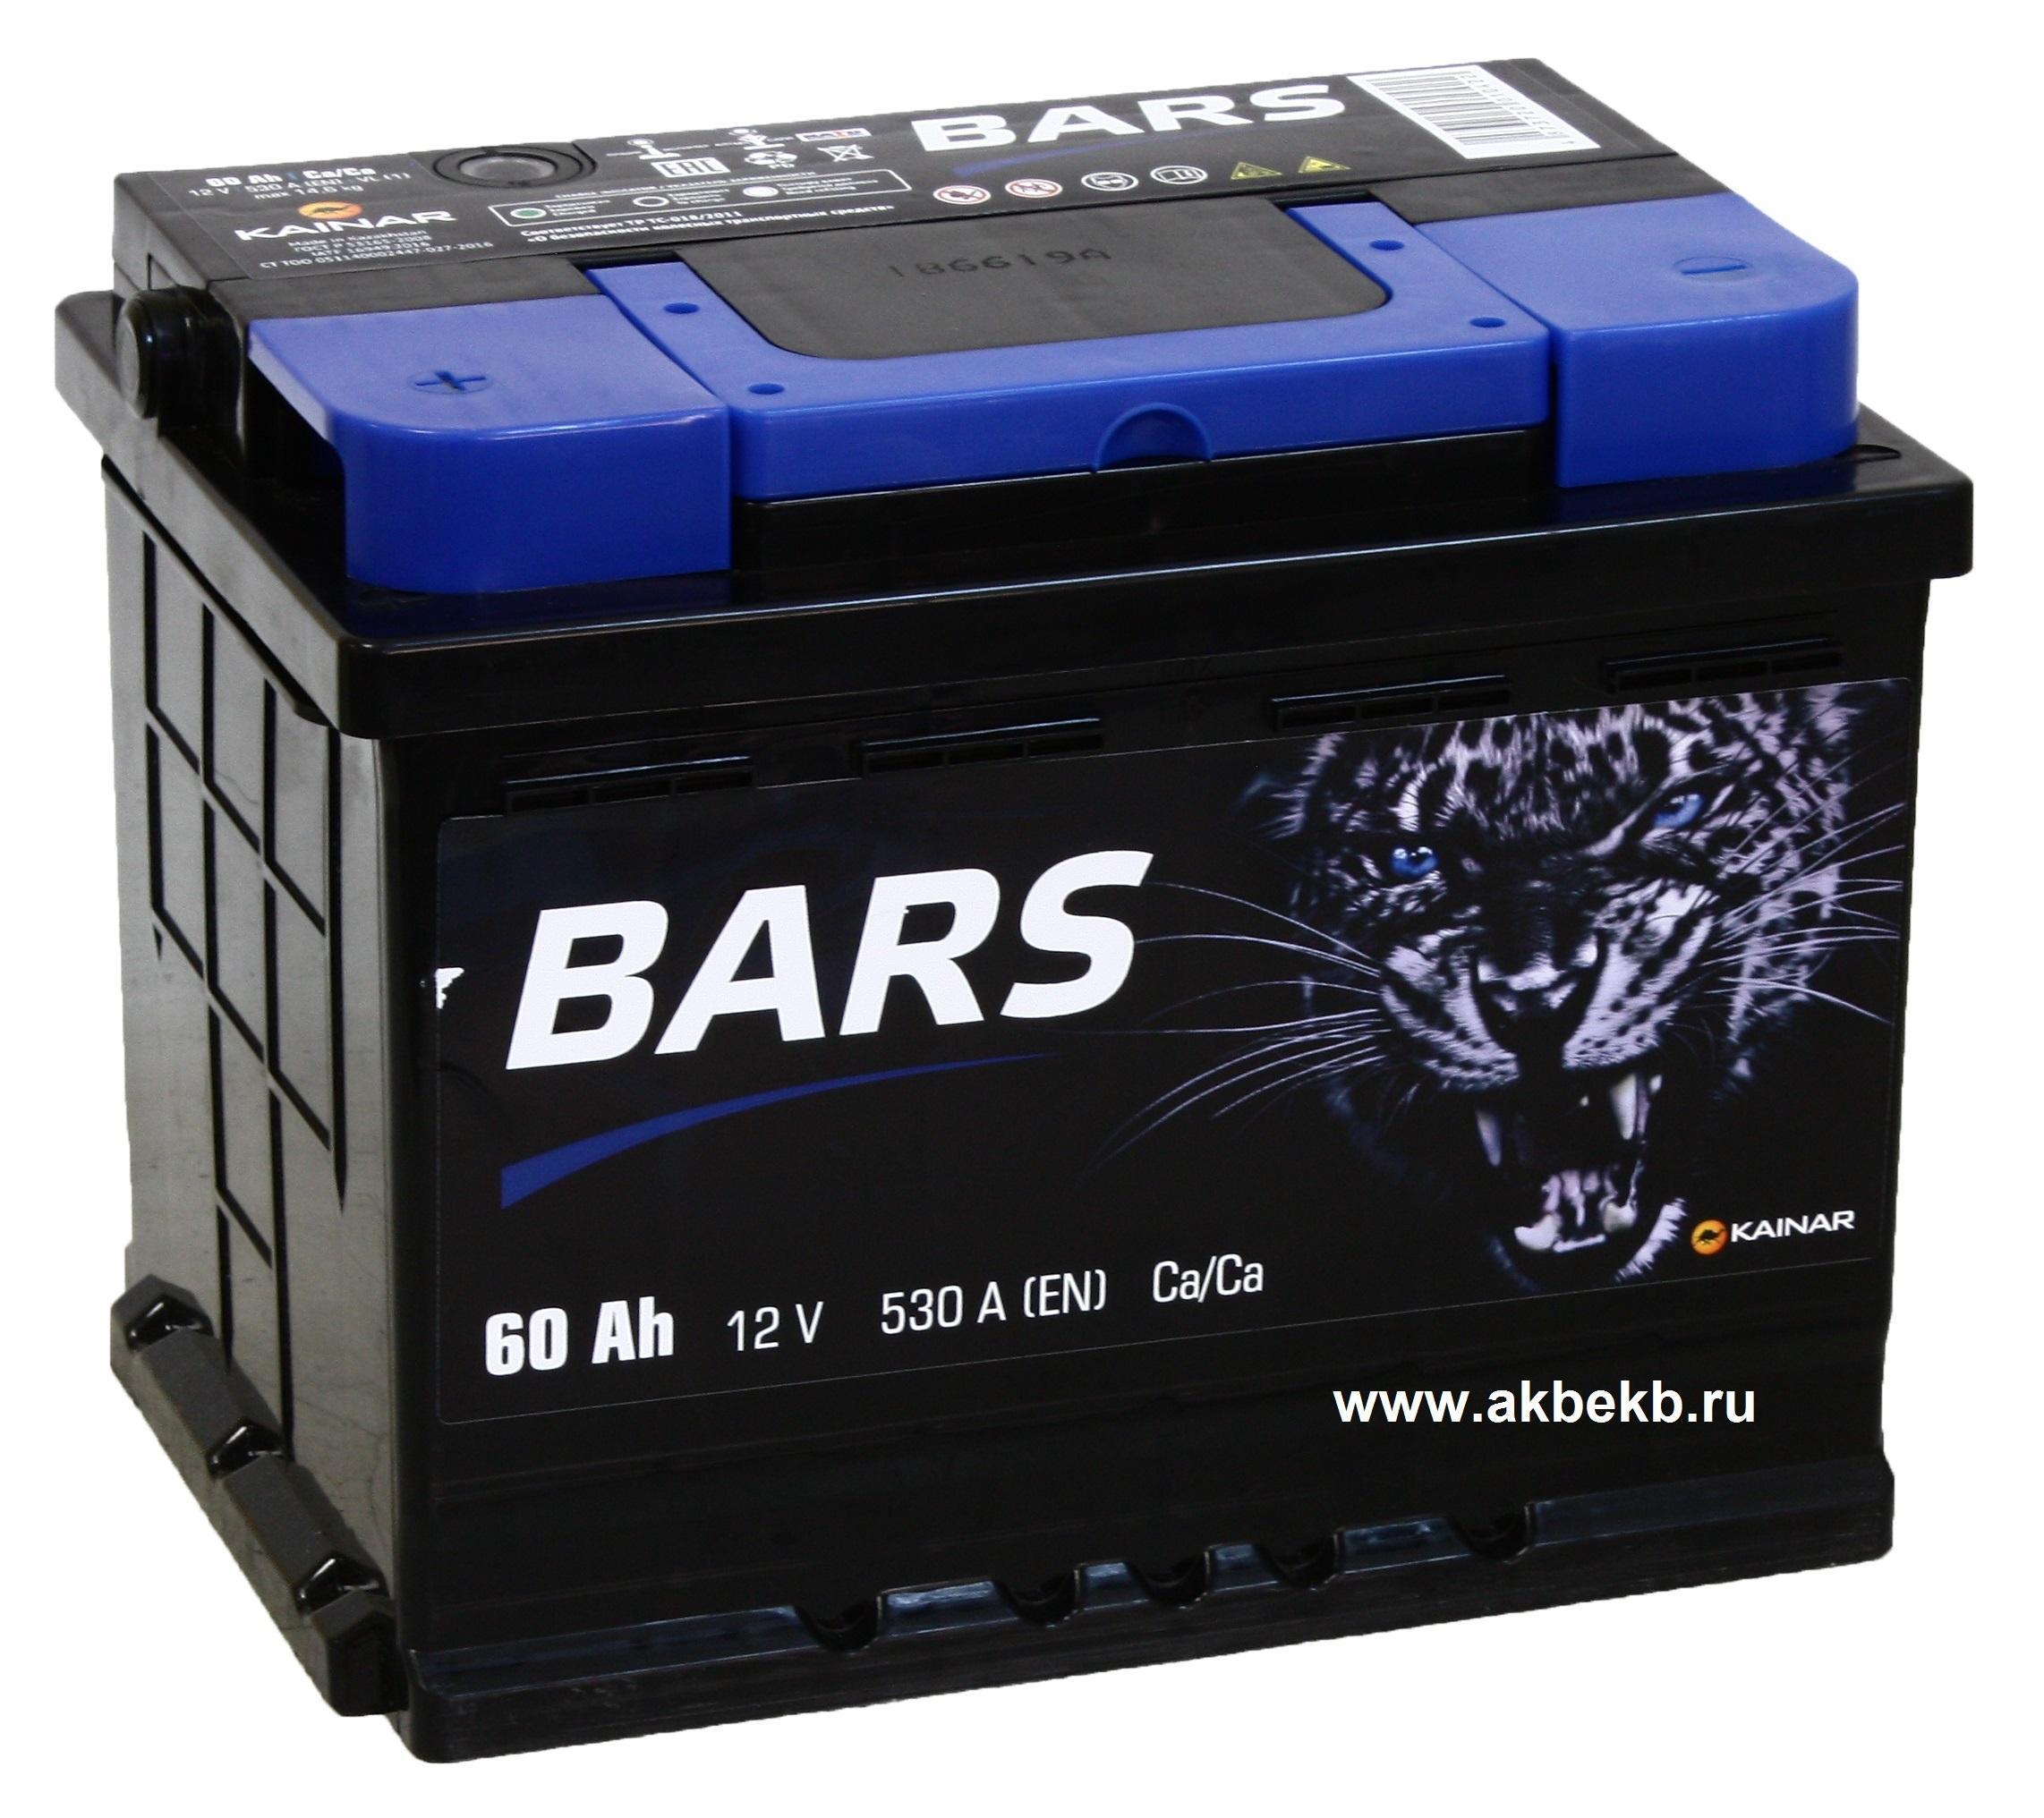 Легковой аккумулятор. АКБ Барс 60 Ач. АКБ Bars 60 Ач 6ст-60.0 VL. Bars Premium 60 Ач. Аккумулятор Bars 60ah п/п.